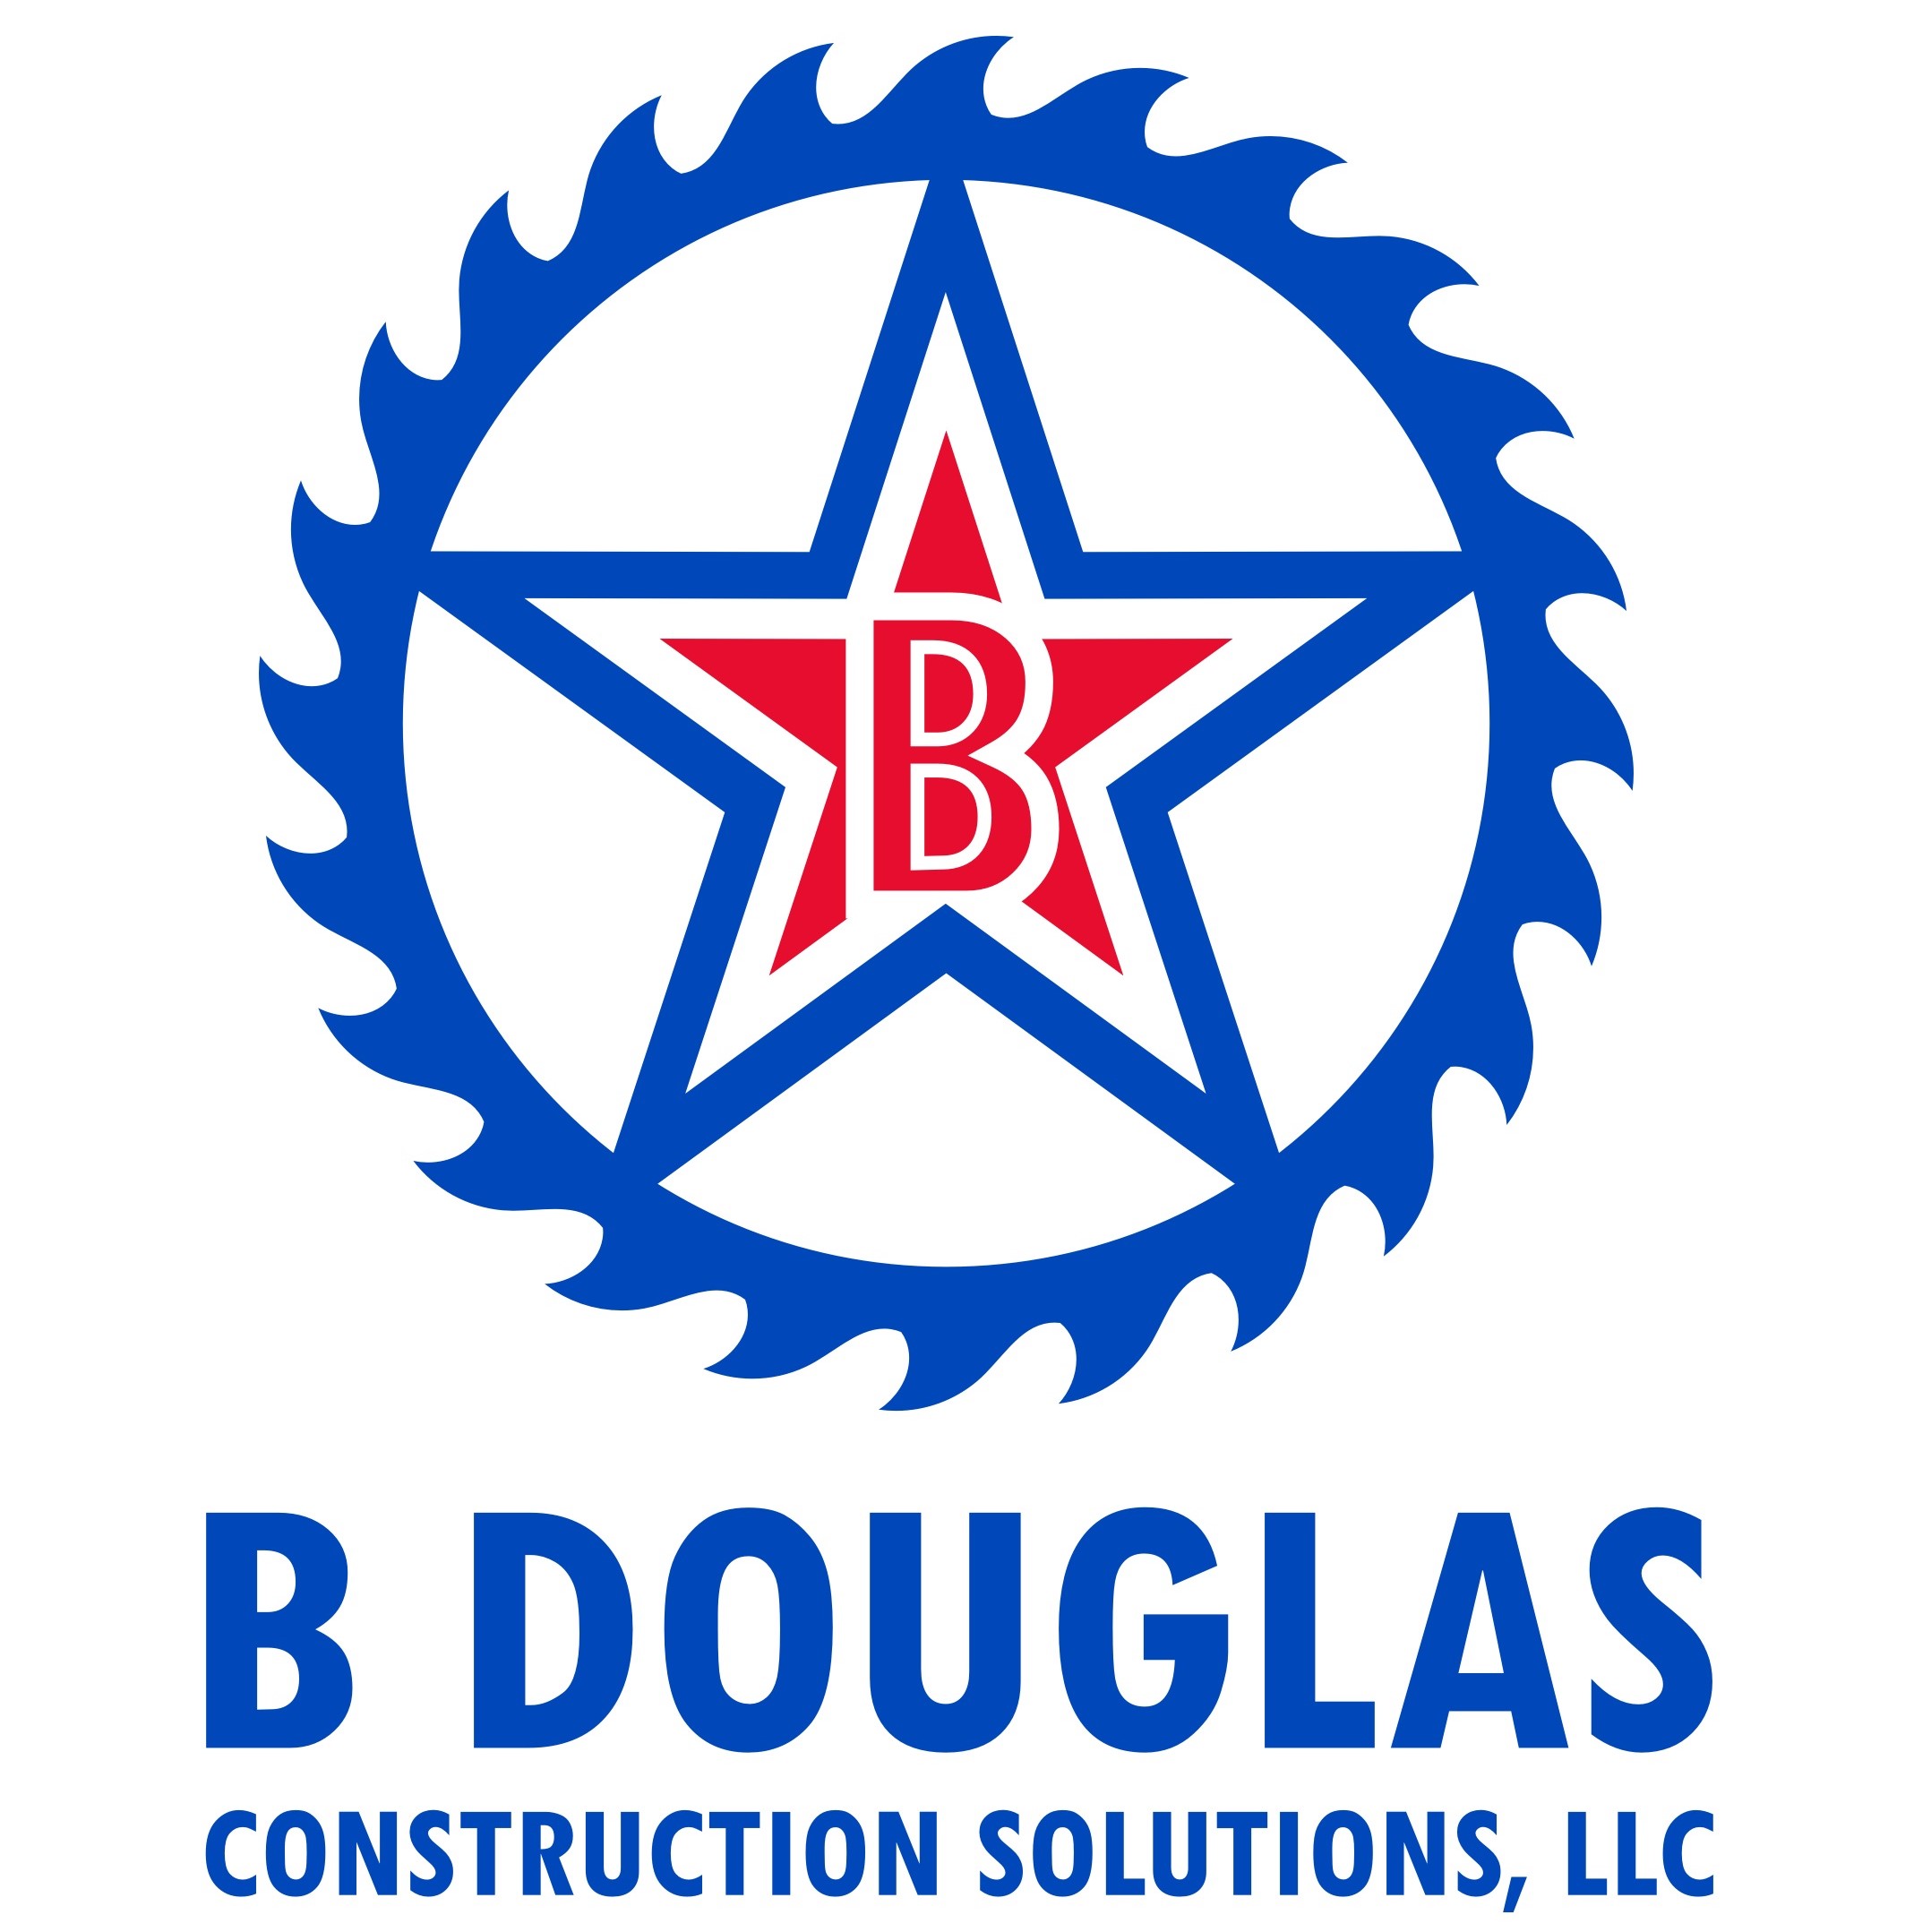 B Douglas Construction Solutions